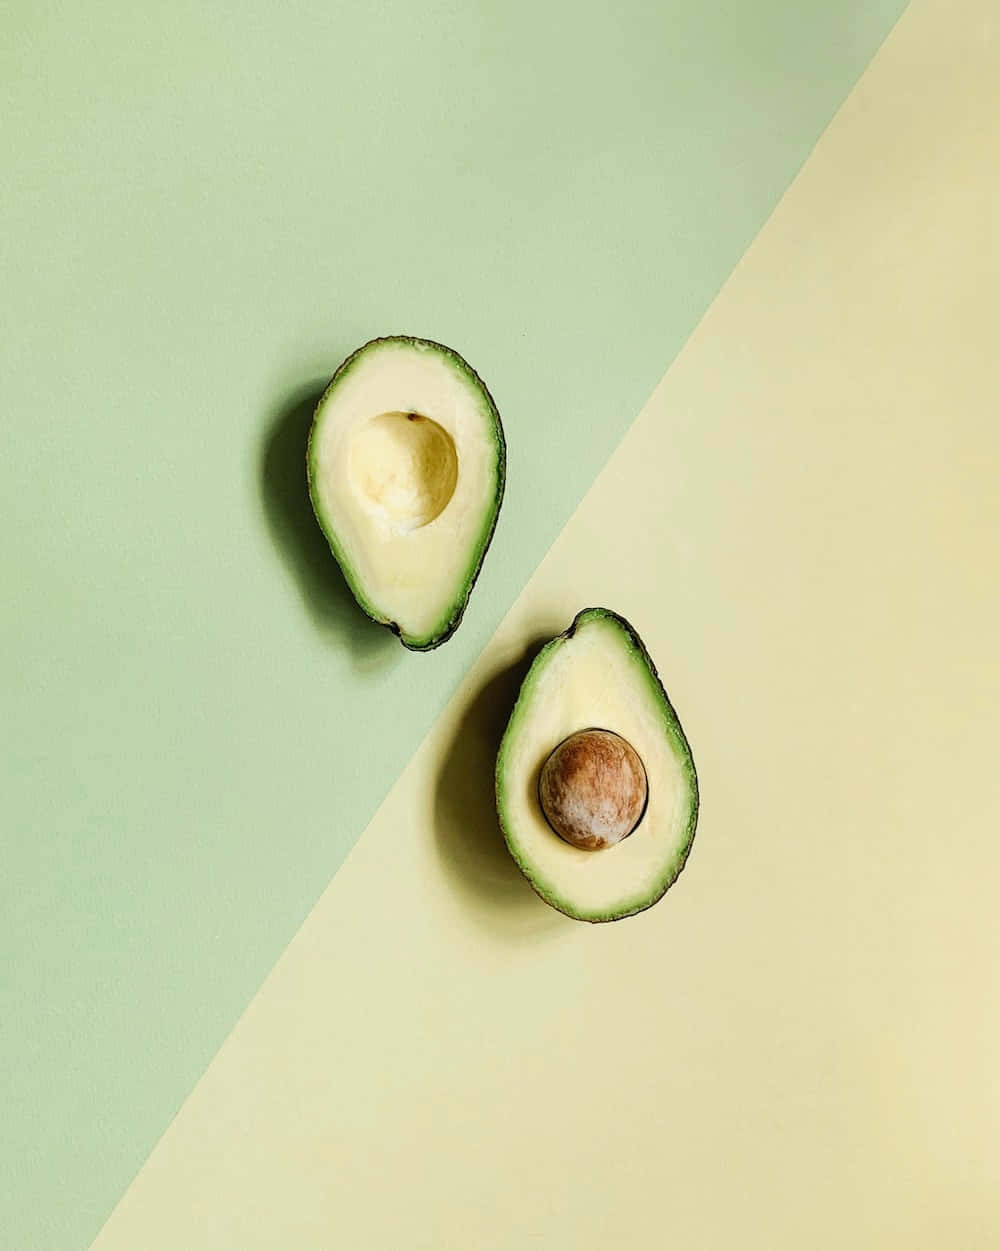 Make a delicious&nutritious avocado toast any time!